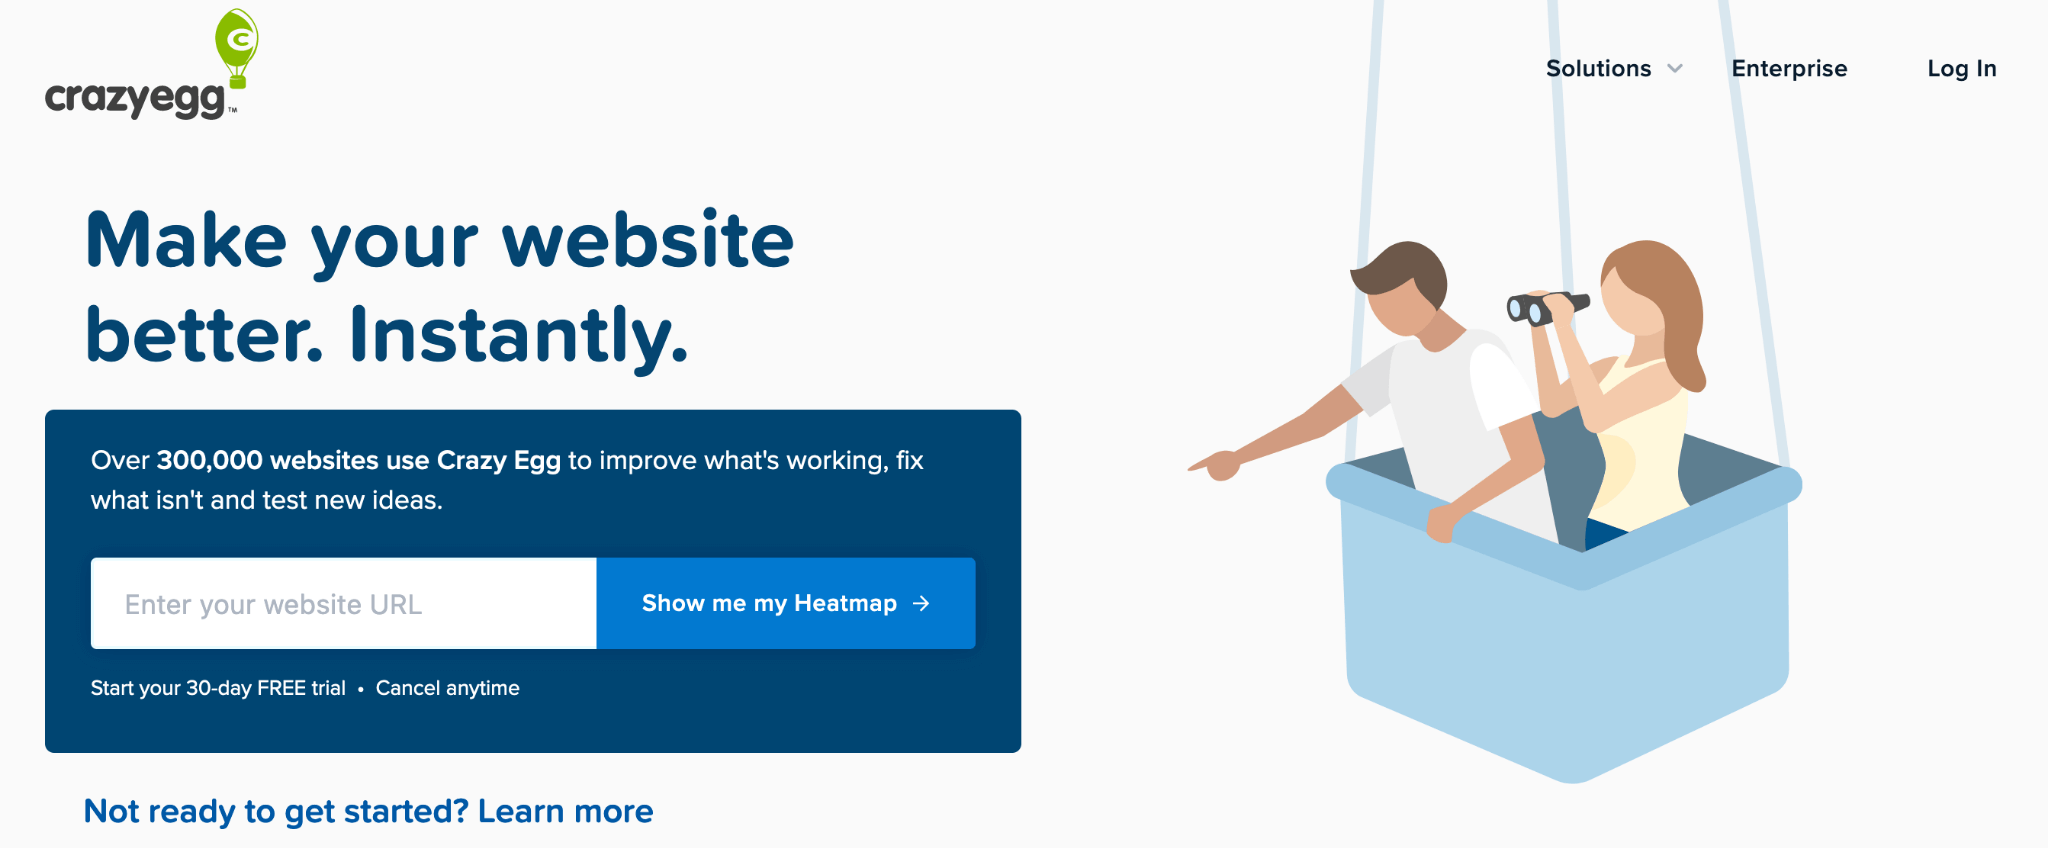 Crazy Egg homepage: Make your website better. Instantly.